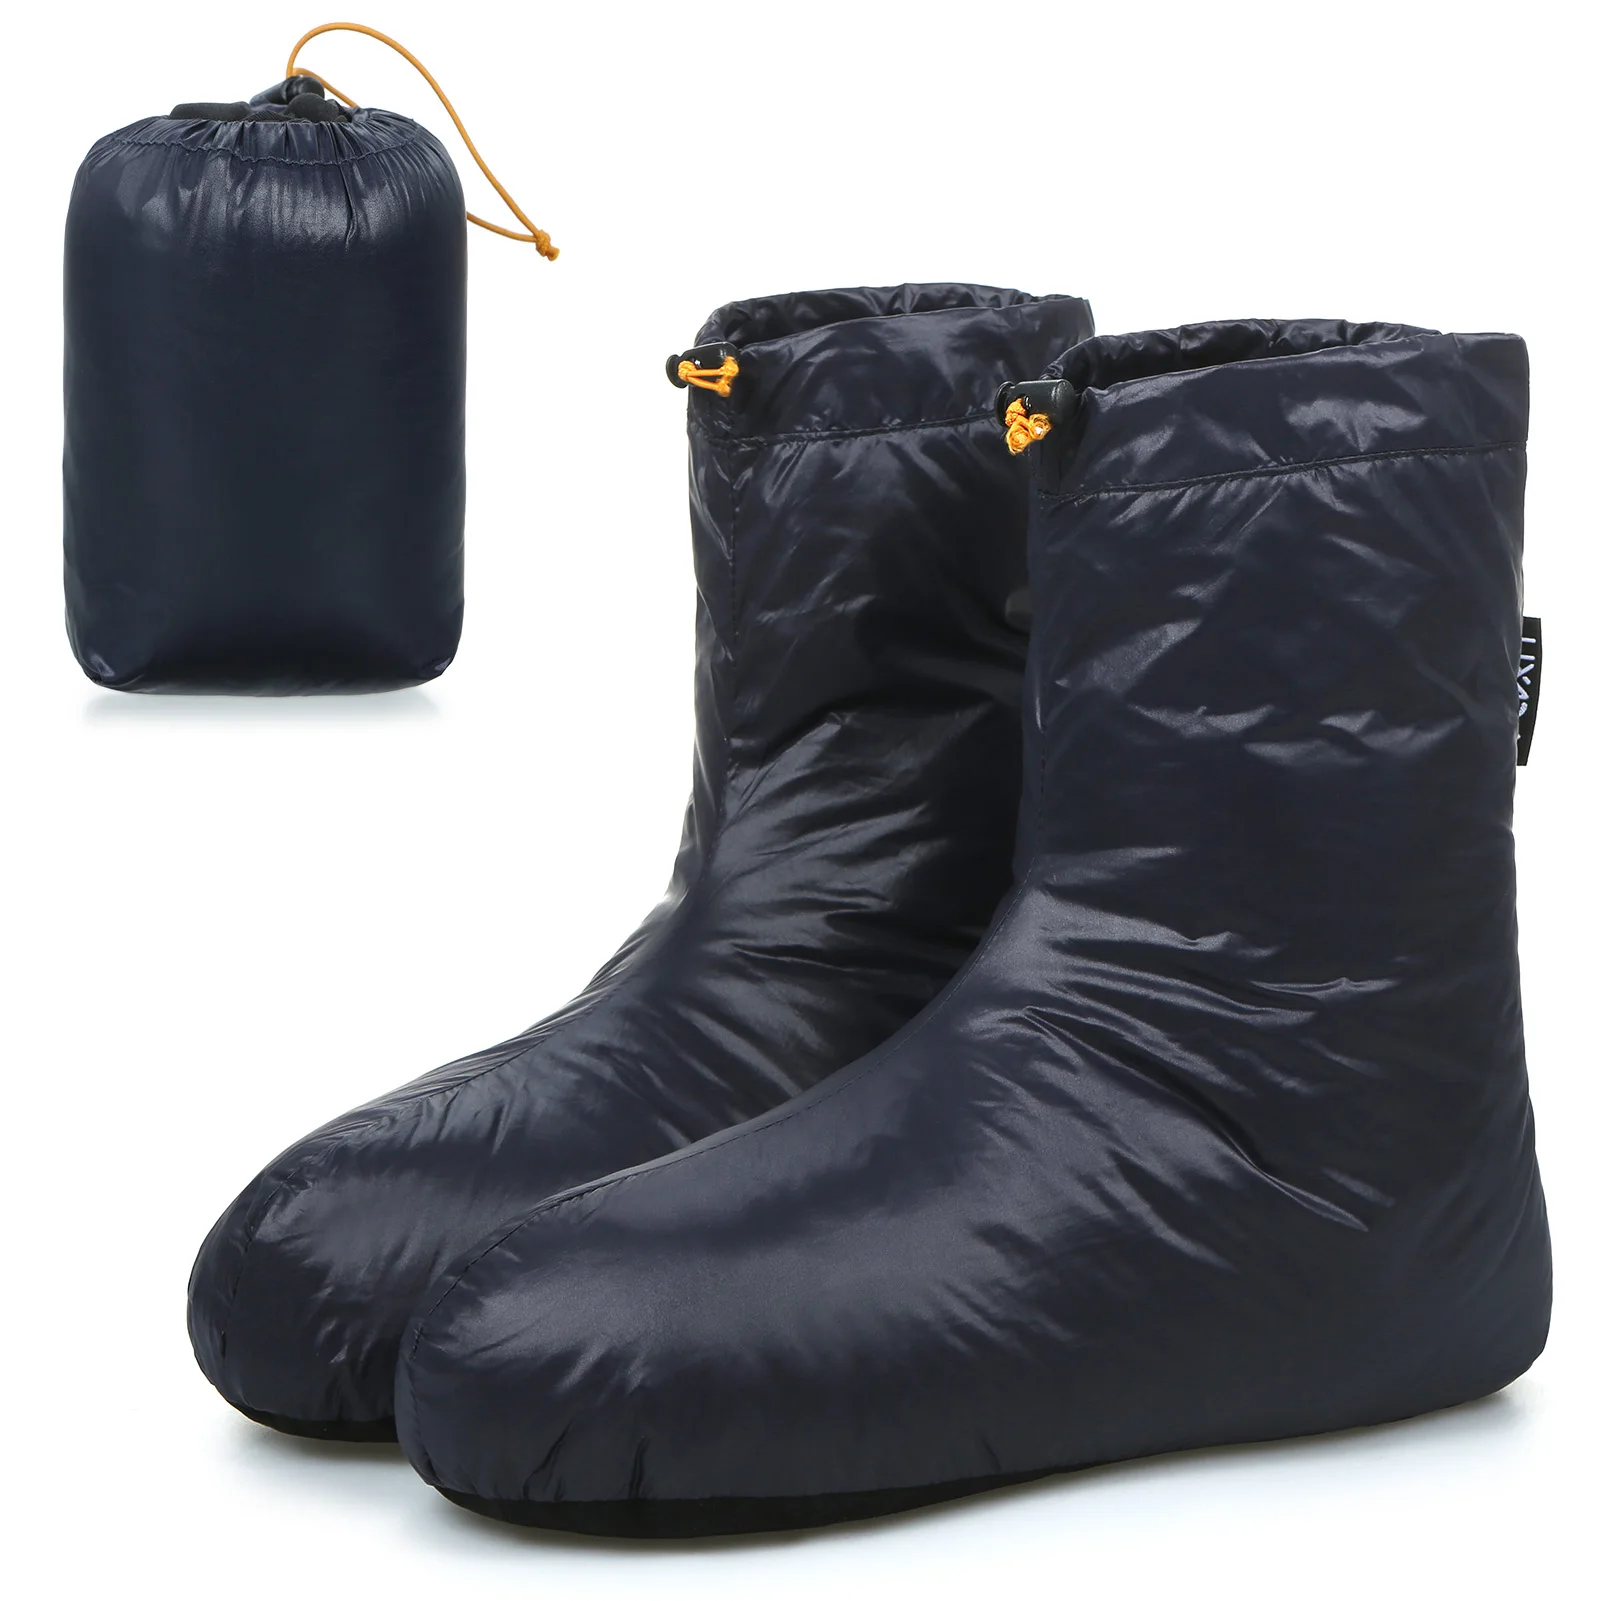 Lixada Winter Down Booties Socks Warm Soft Windproof Sleeping Slippers with Adjustable Drawstring Camping Equipment